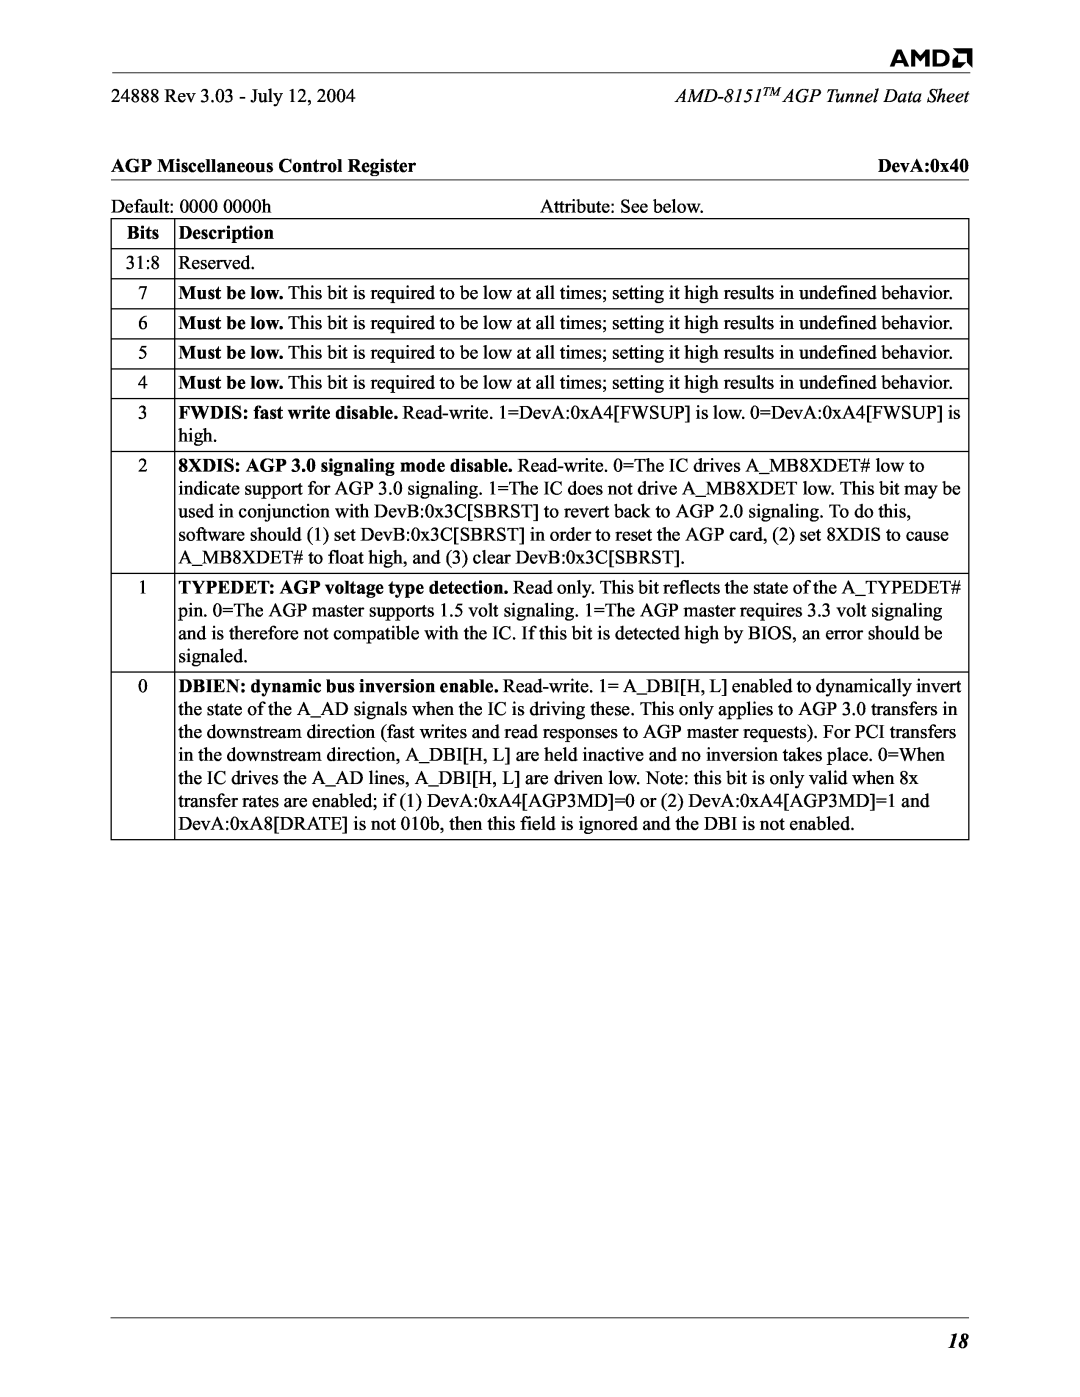 AMD specifications AMD-8151TM AGP Tunnel Data Sheet, AGP Miscellaneous Control Register, DevA, Bits, Description 